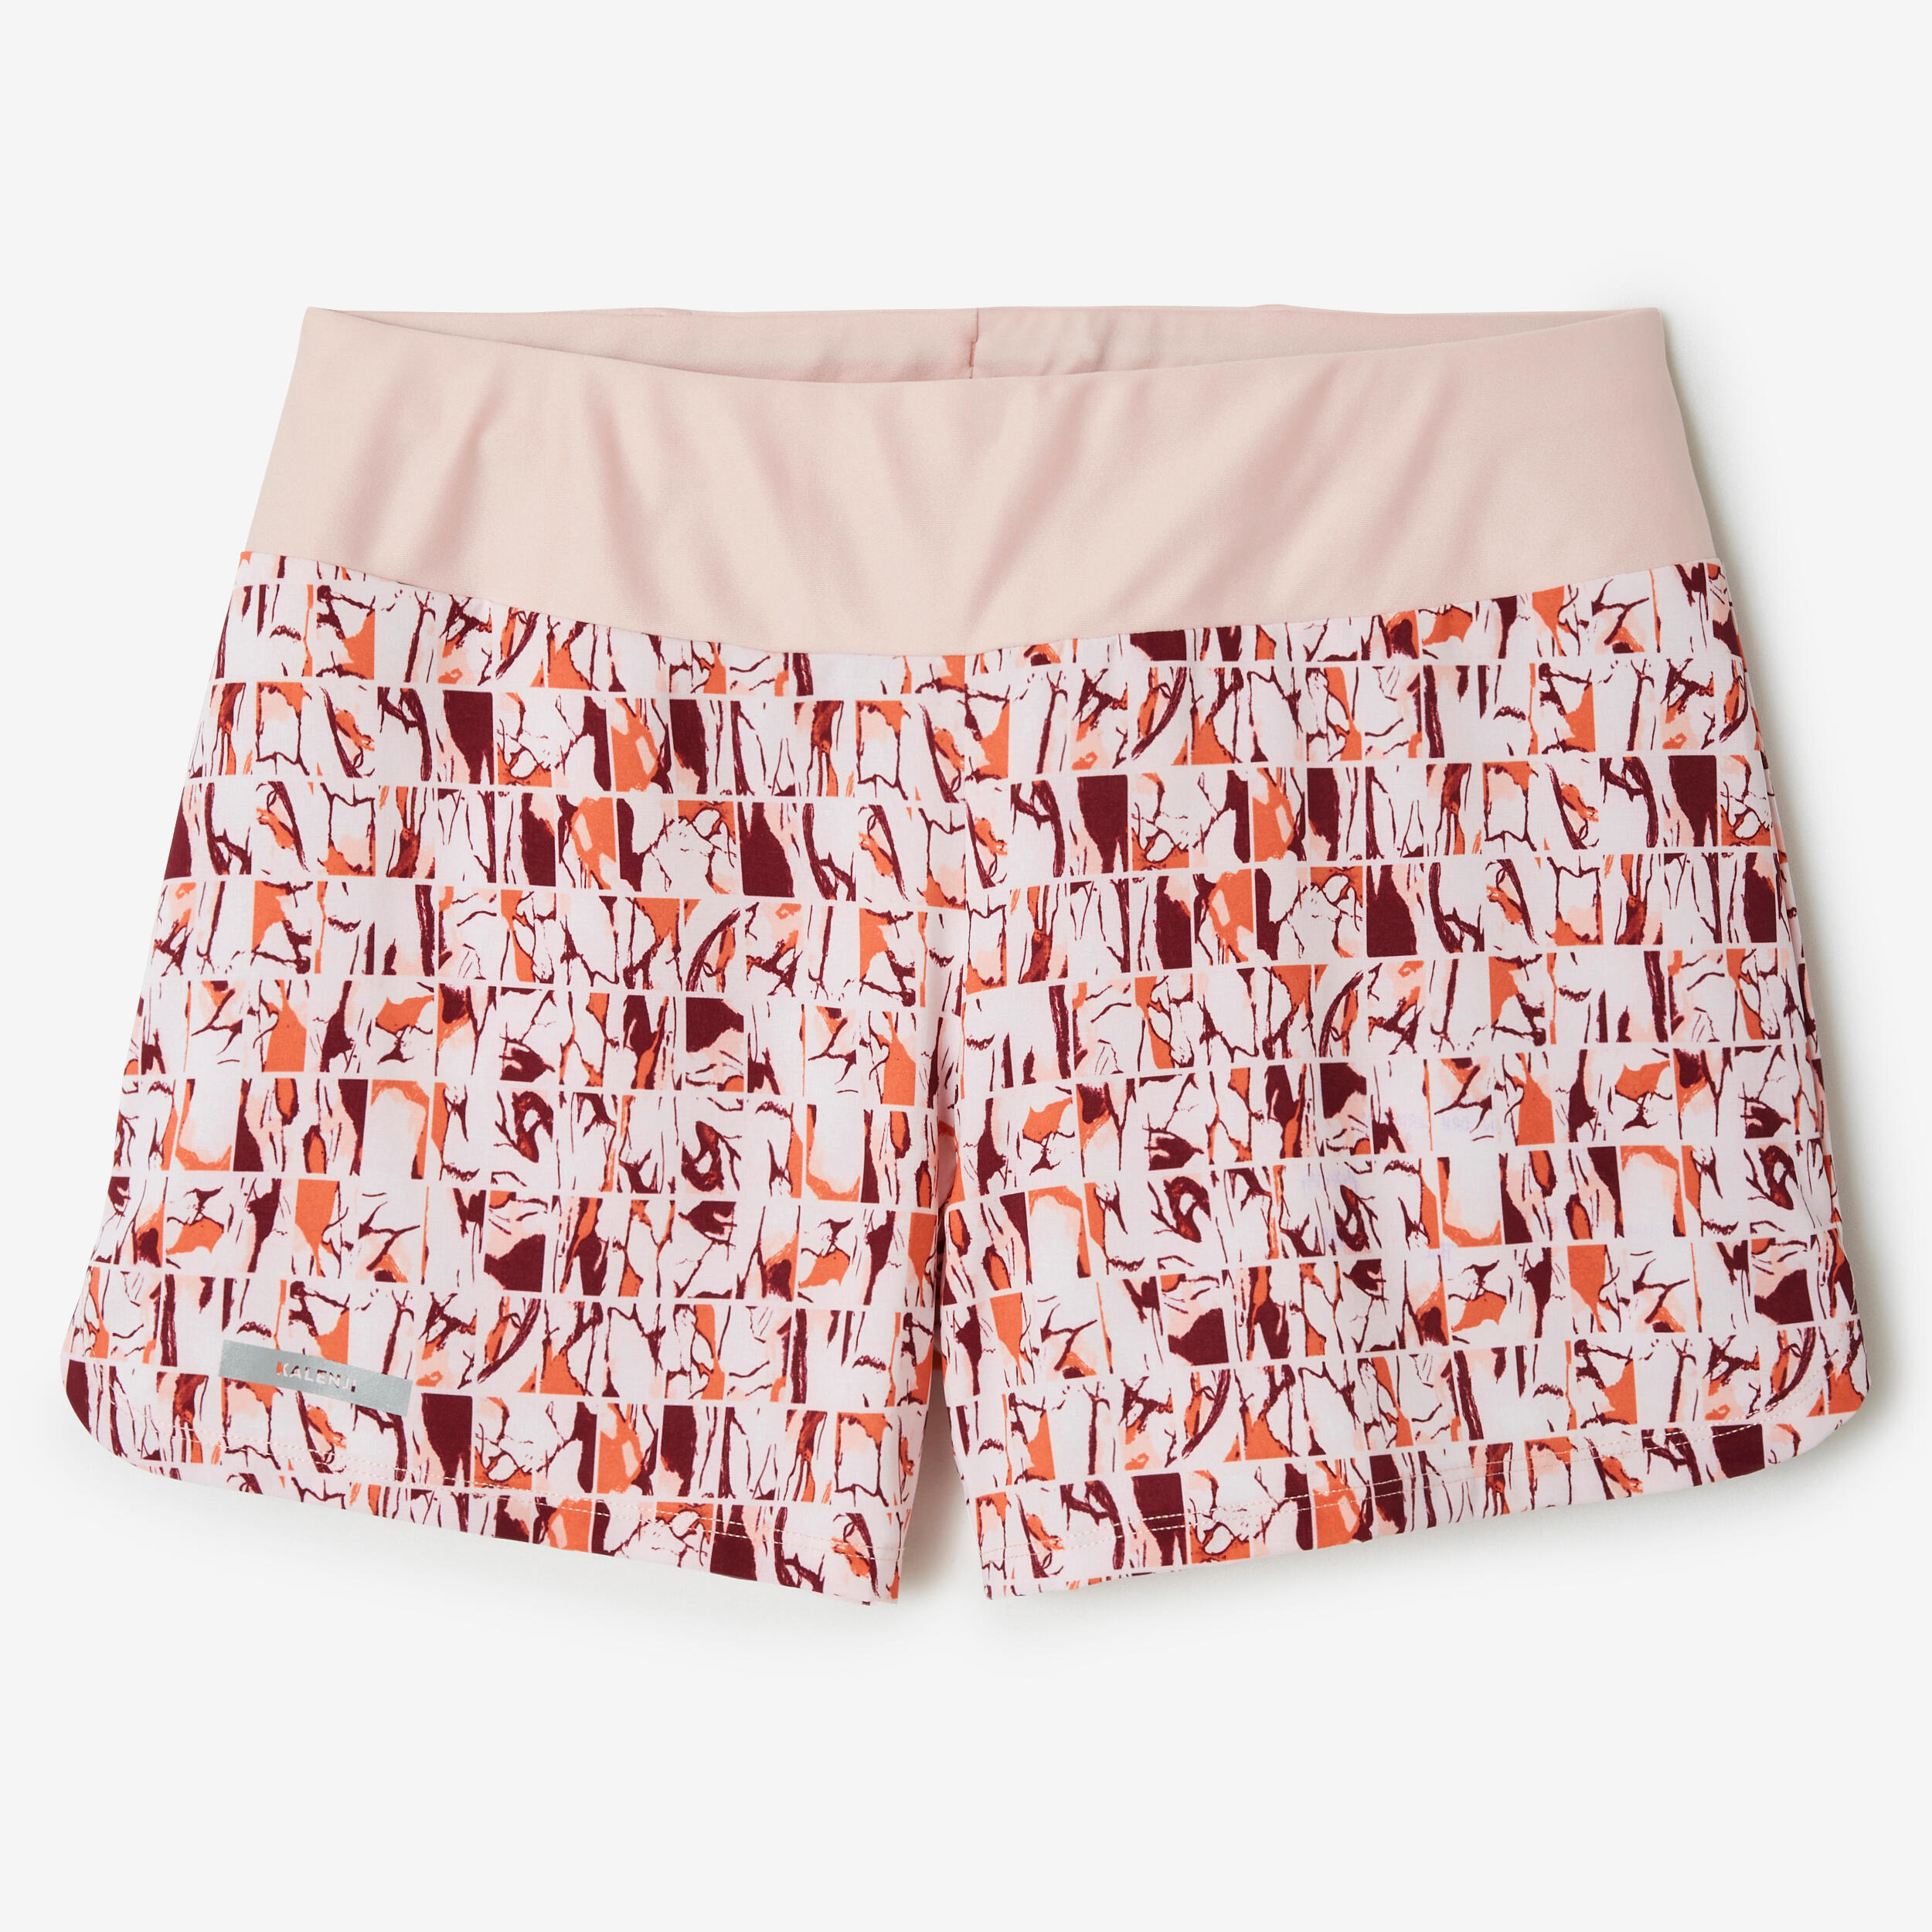 Dry women's running shorts - pink print 8/8